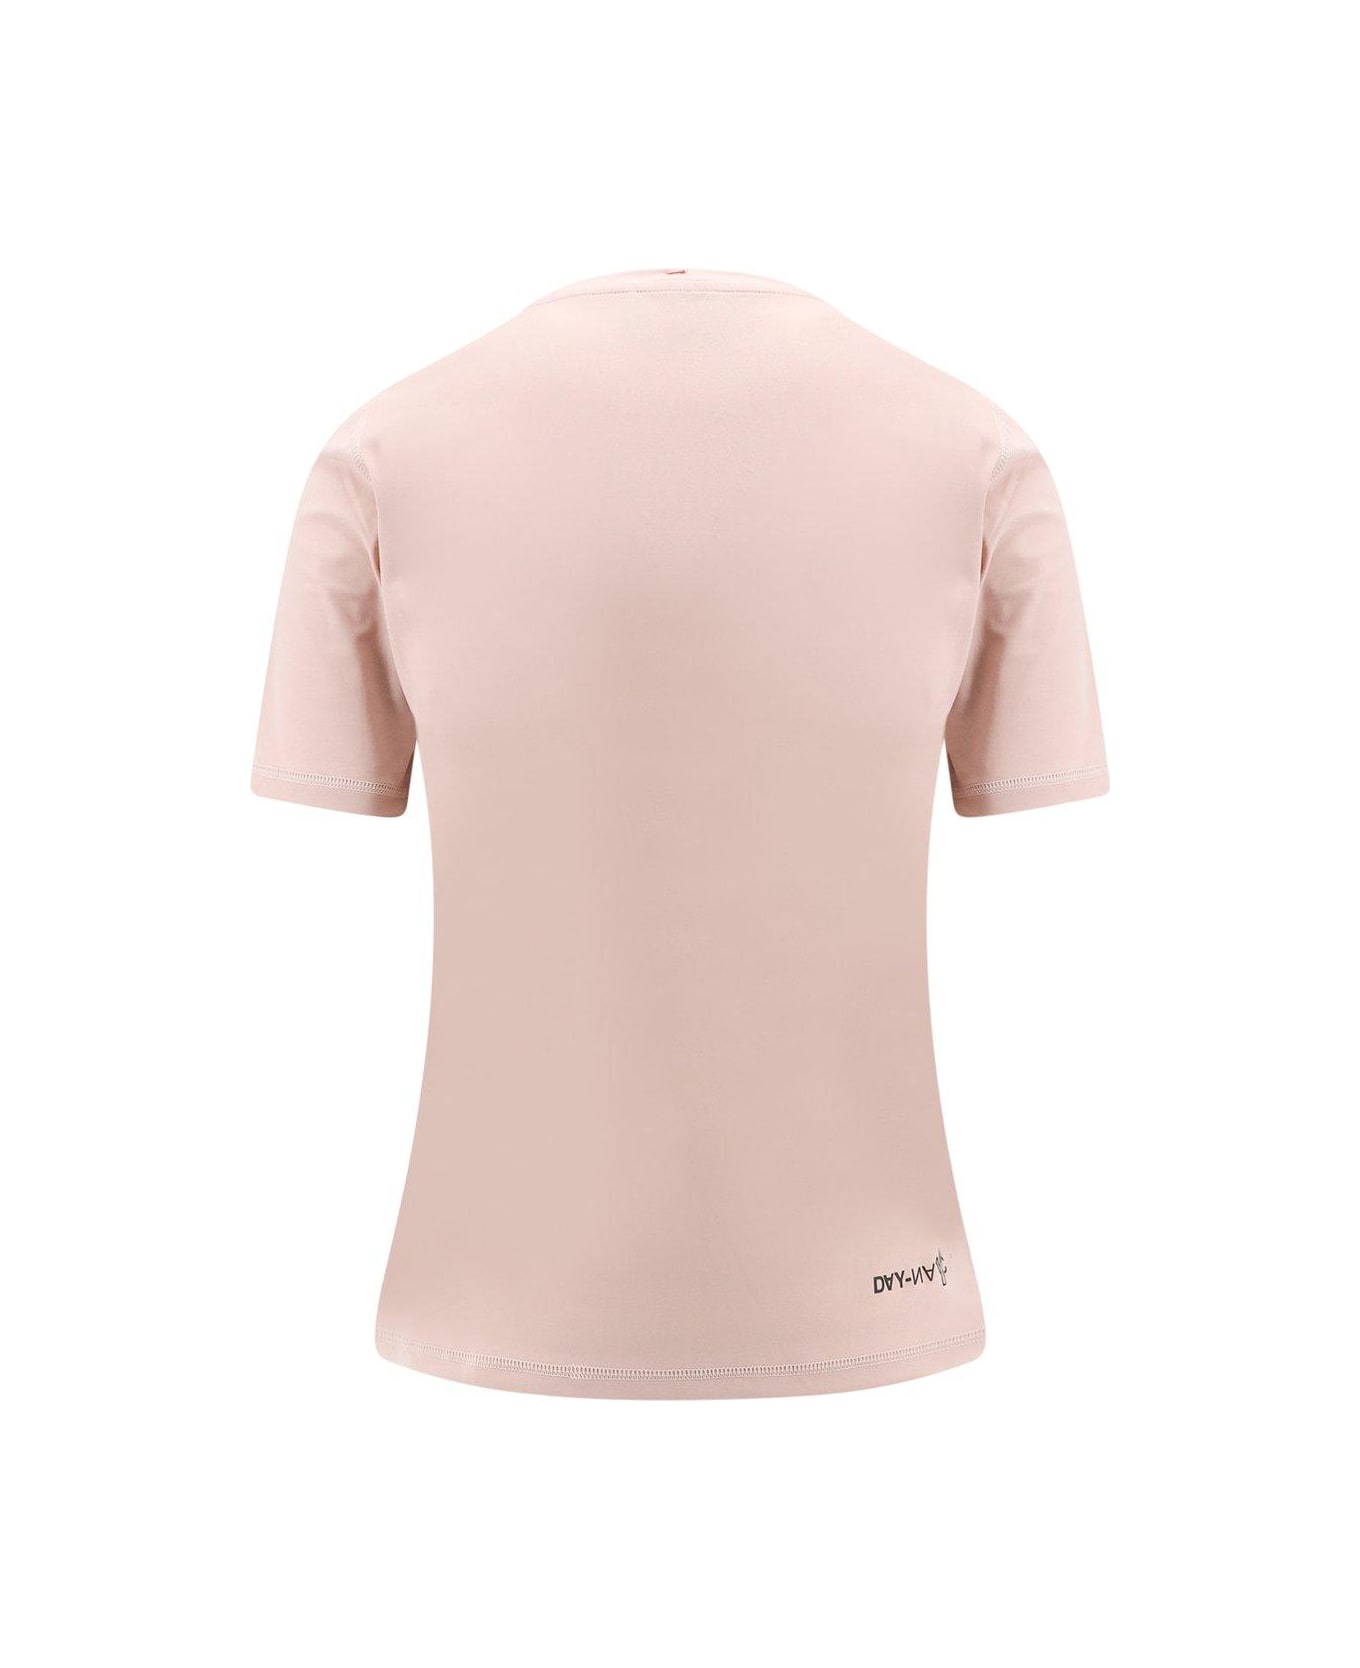 Moncler Grenoble Logo Patch Crewneck T-shirt - Lighrt pink Tシャツ